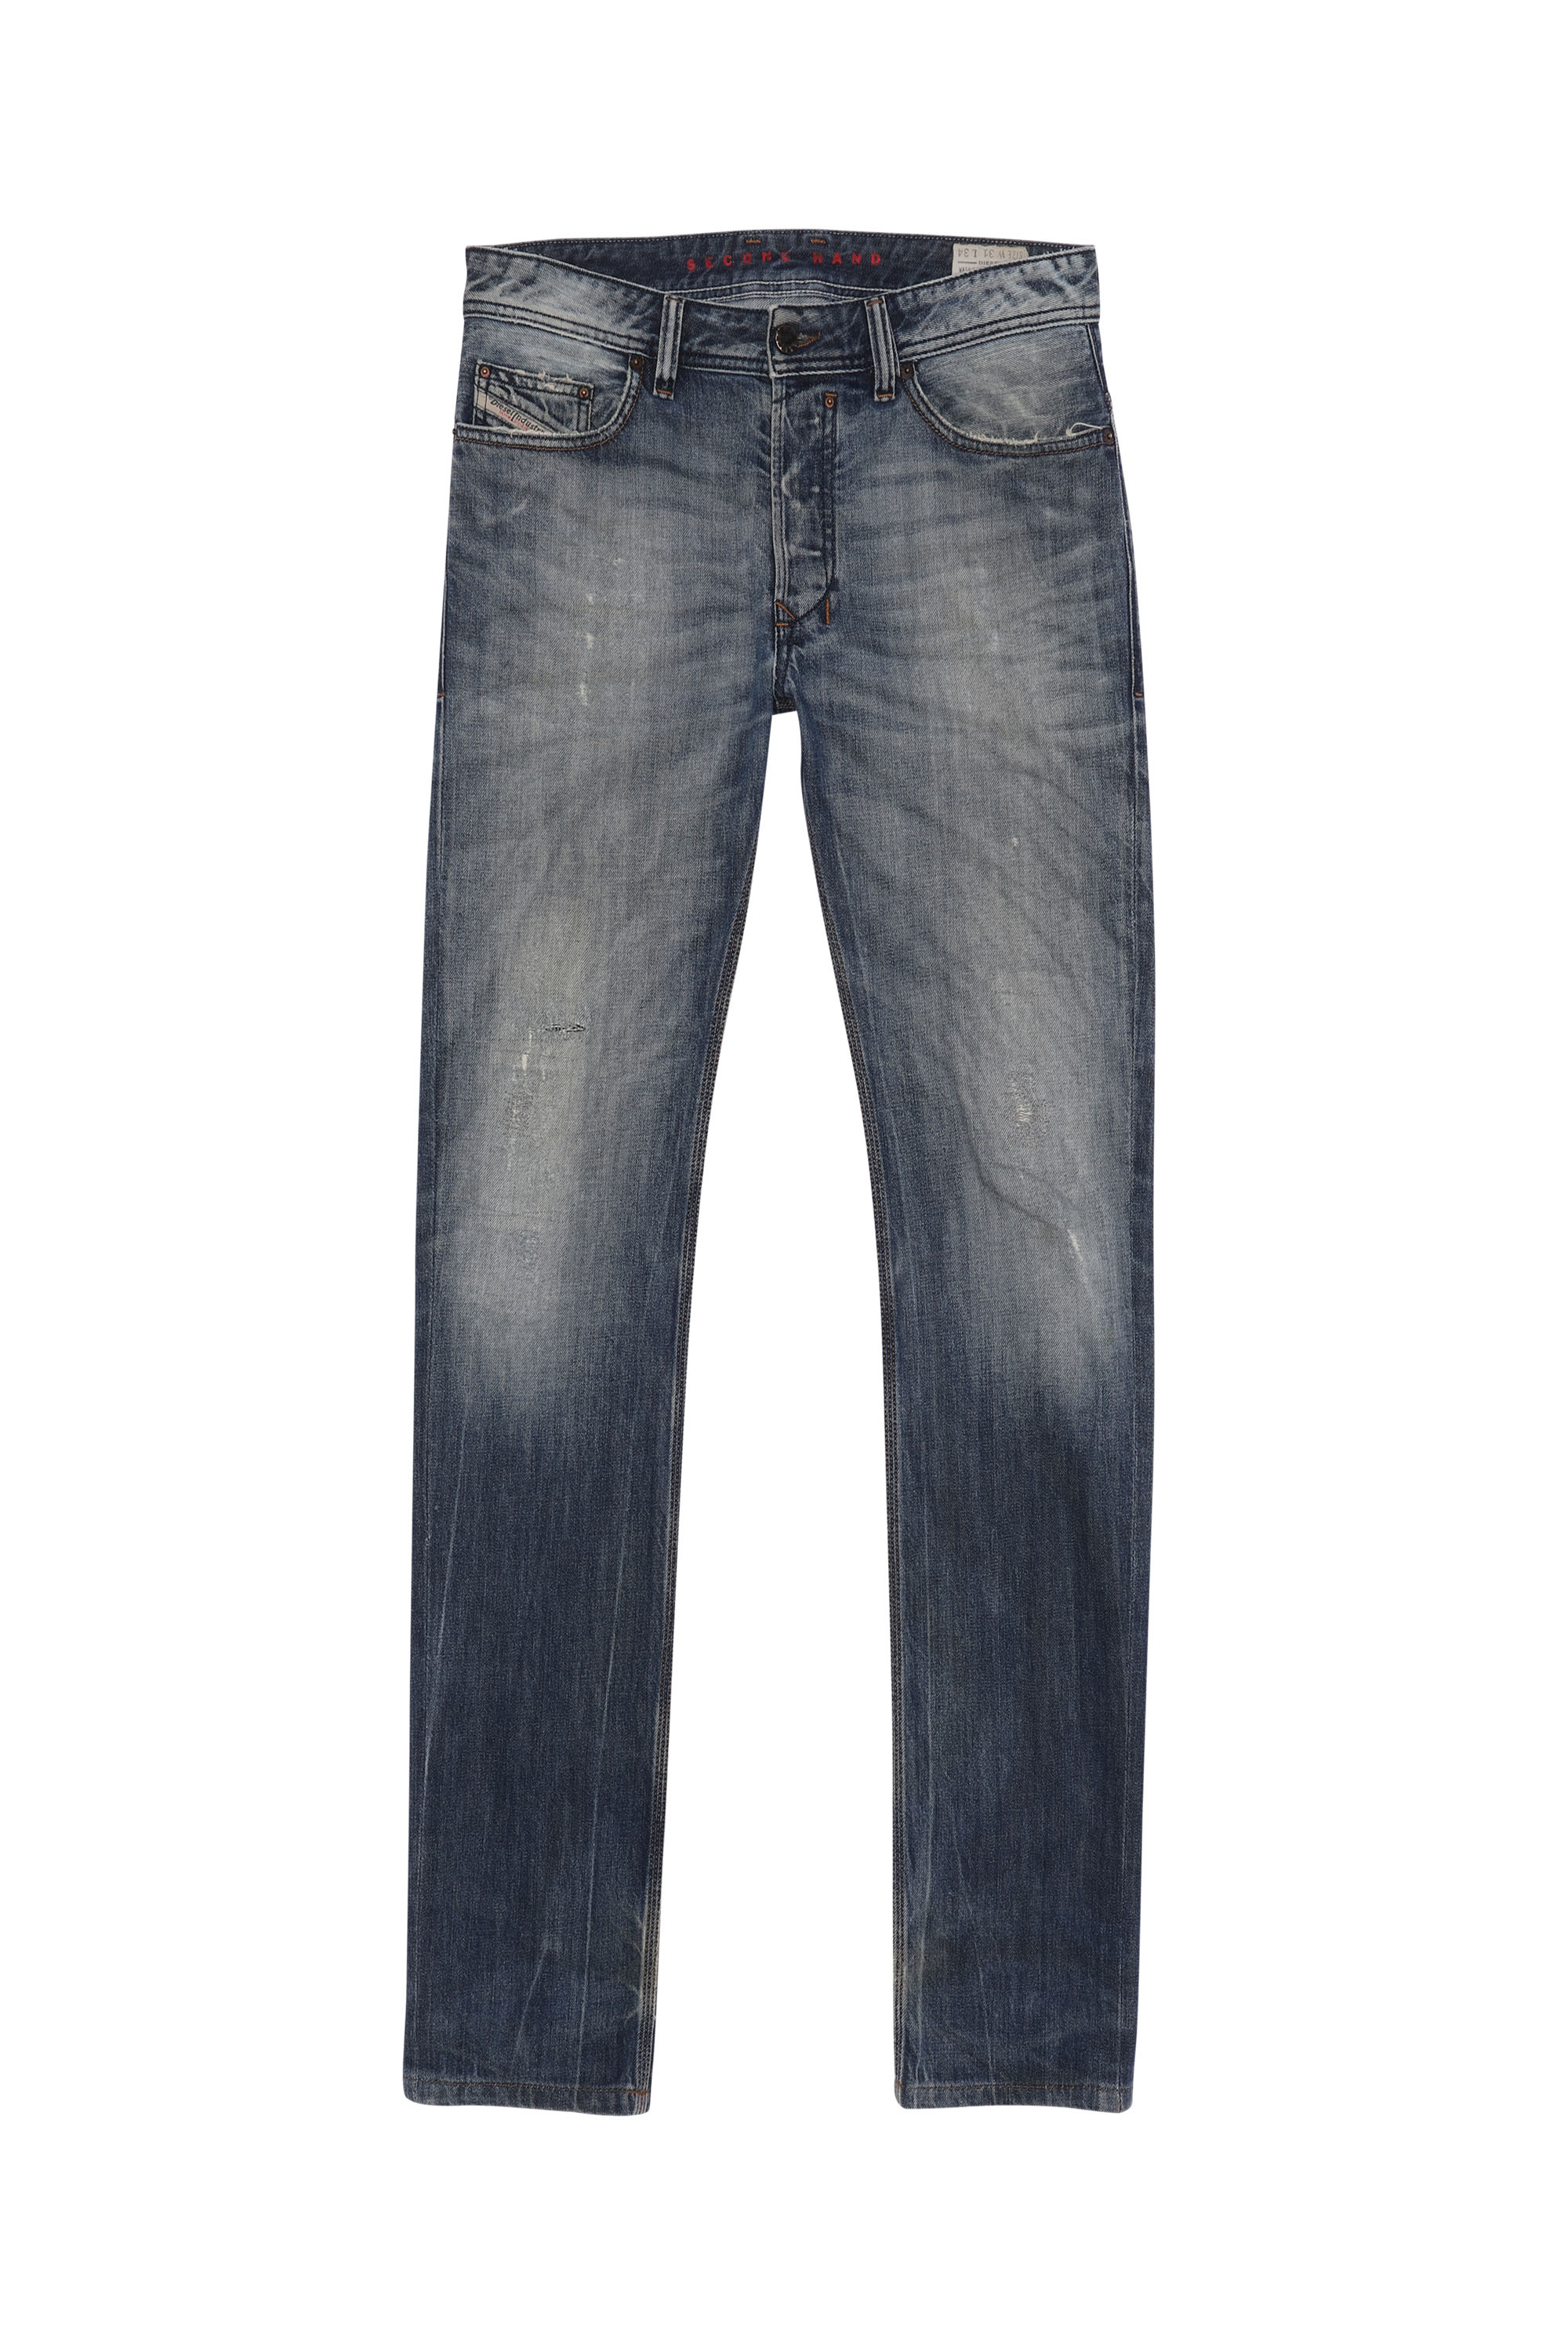 SAFADO, Dark Blue - Jeans